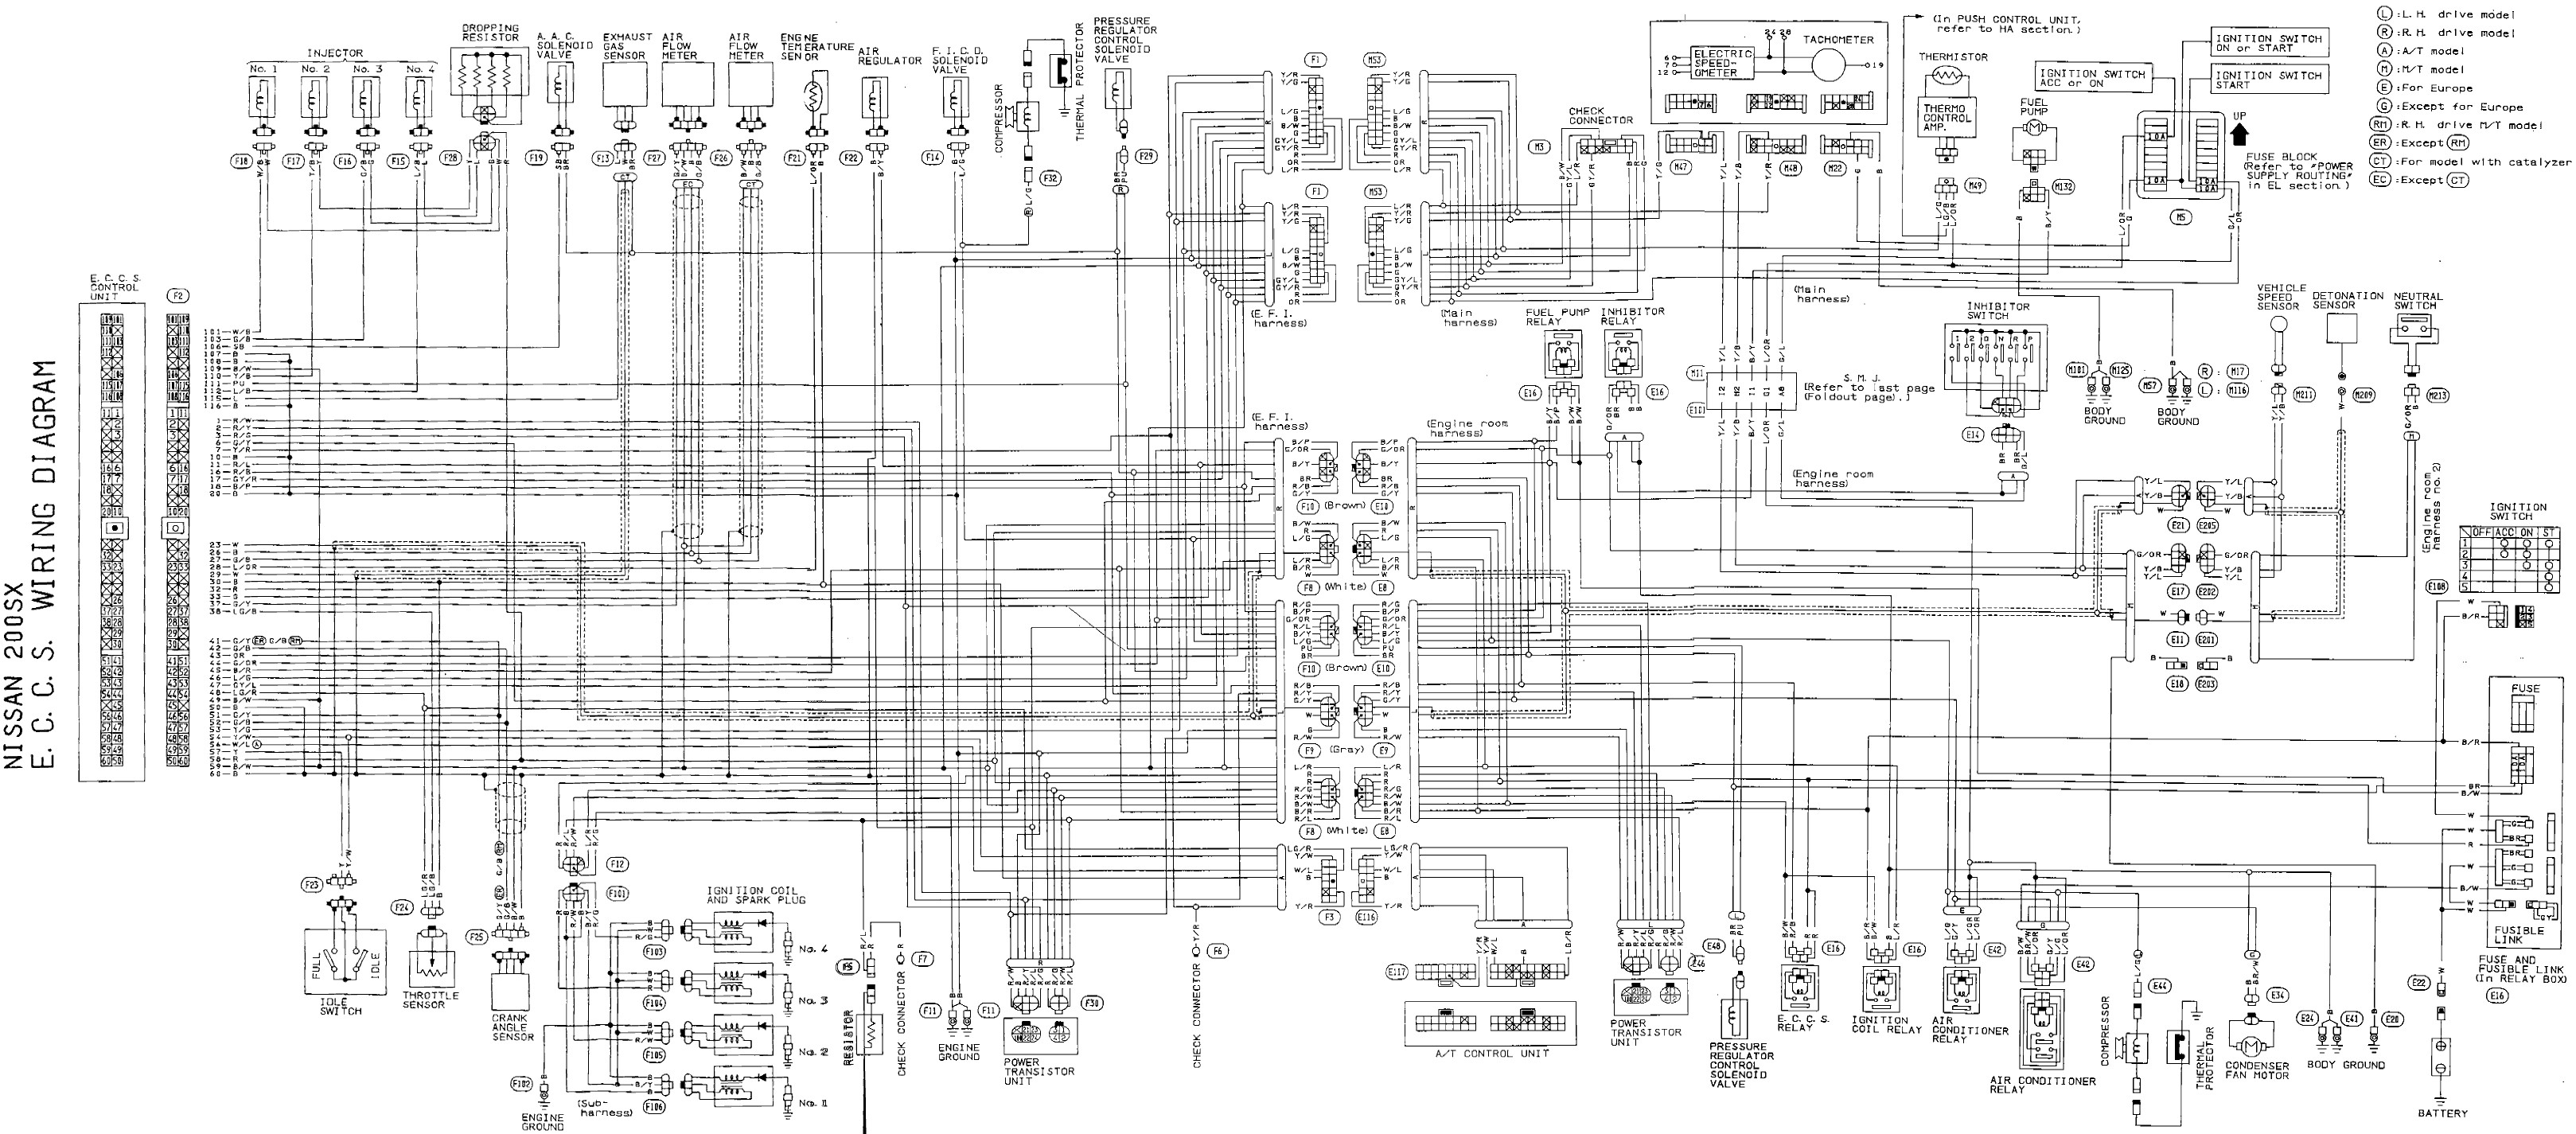 Diagram Of Engine 200sx Engine Wiring Harness Get Free Image About Wiring Diagram Of Diagram Of Engine